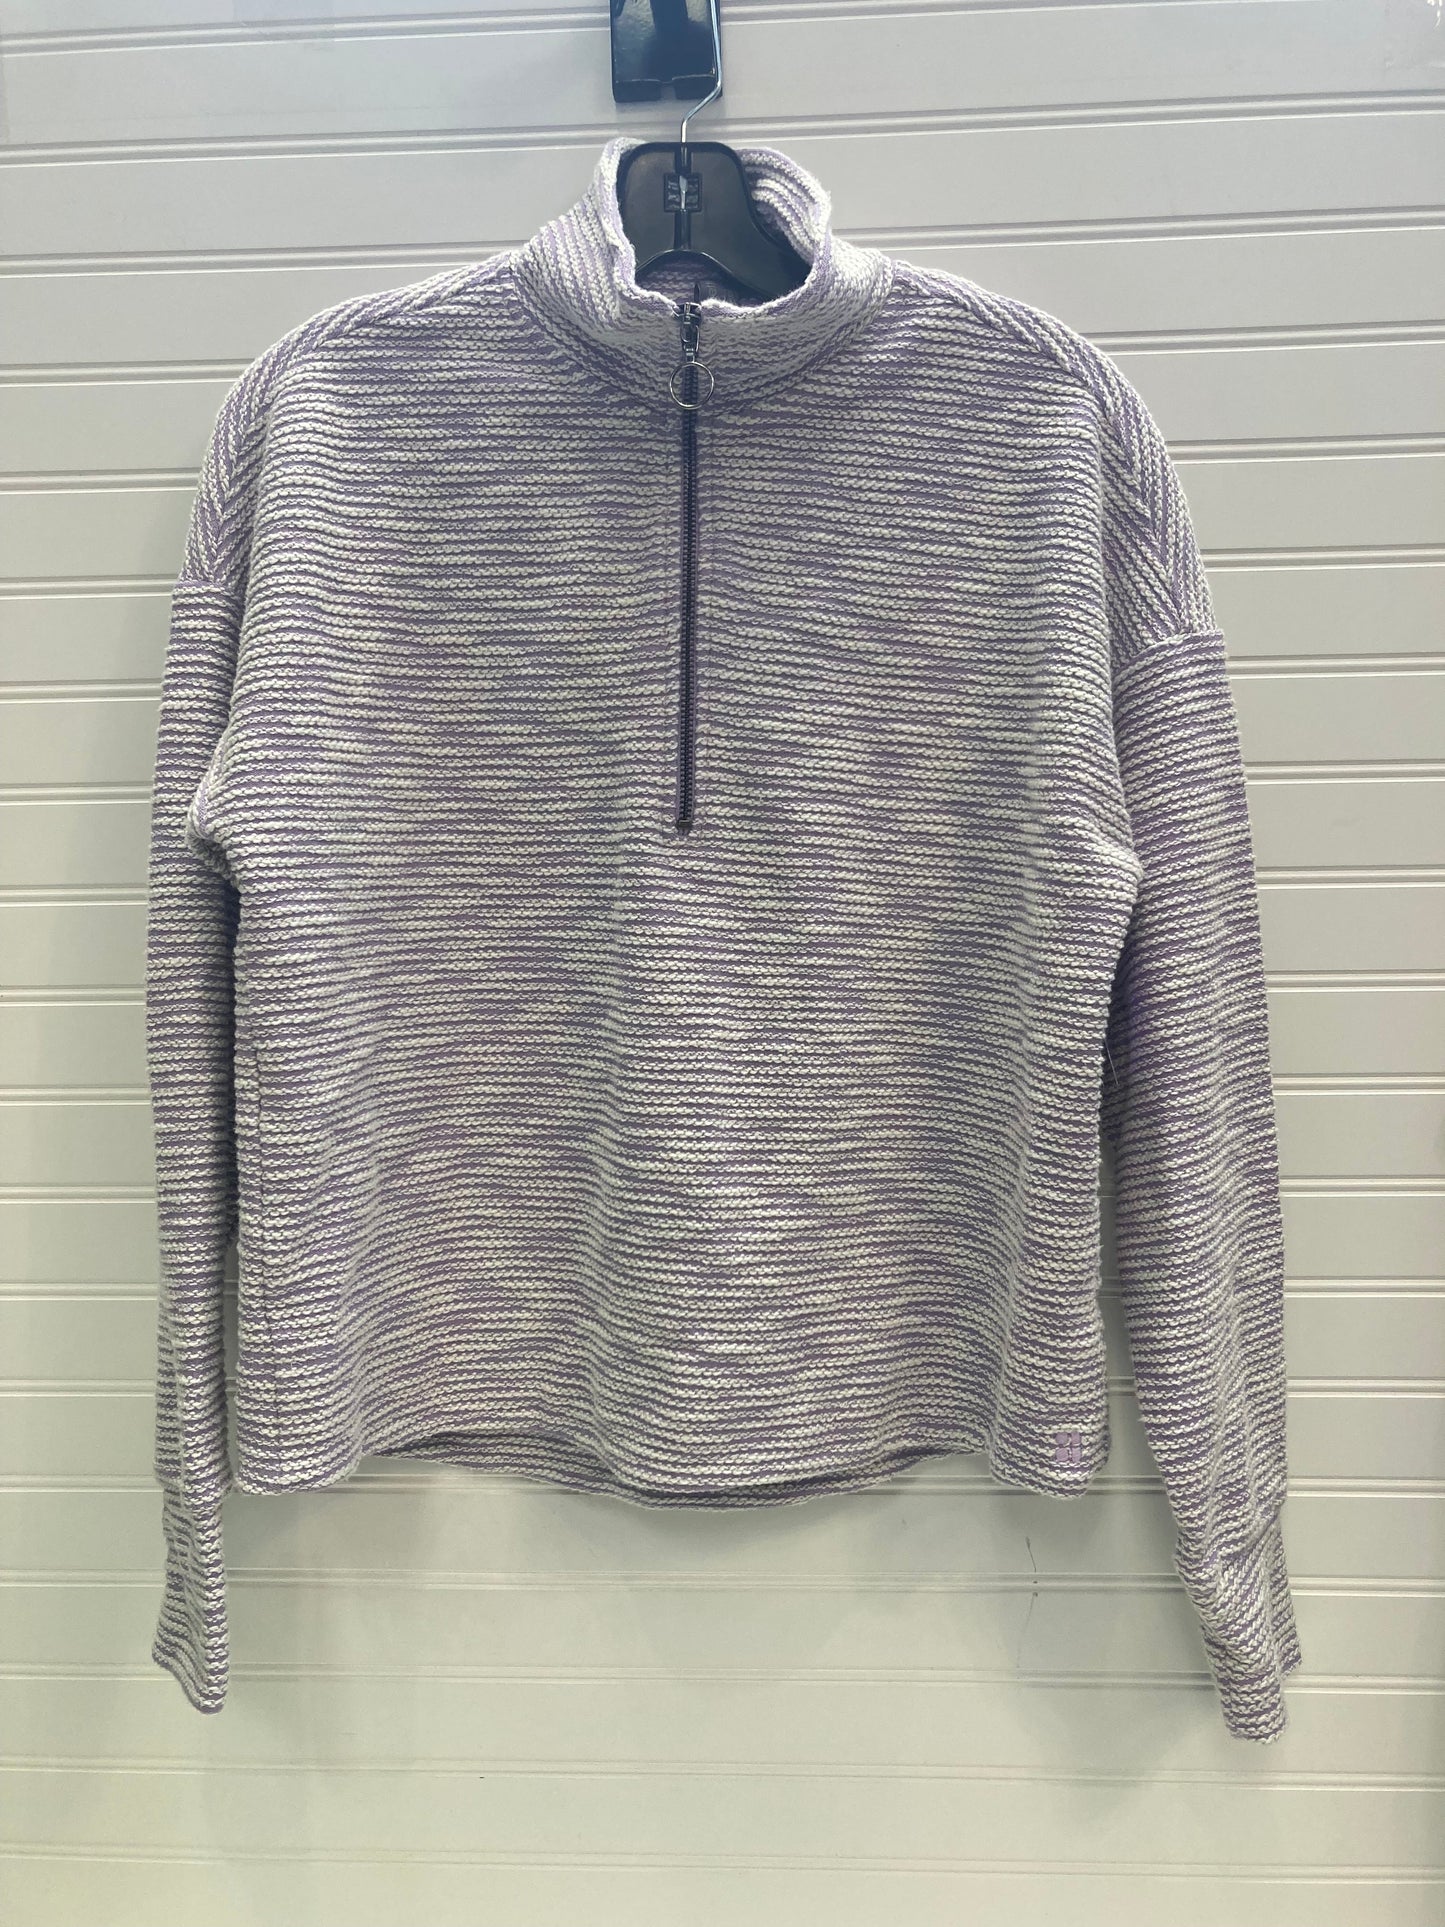 Purple & White Athletic Sweatshirt Collar Sweaty Betty, Size S